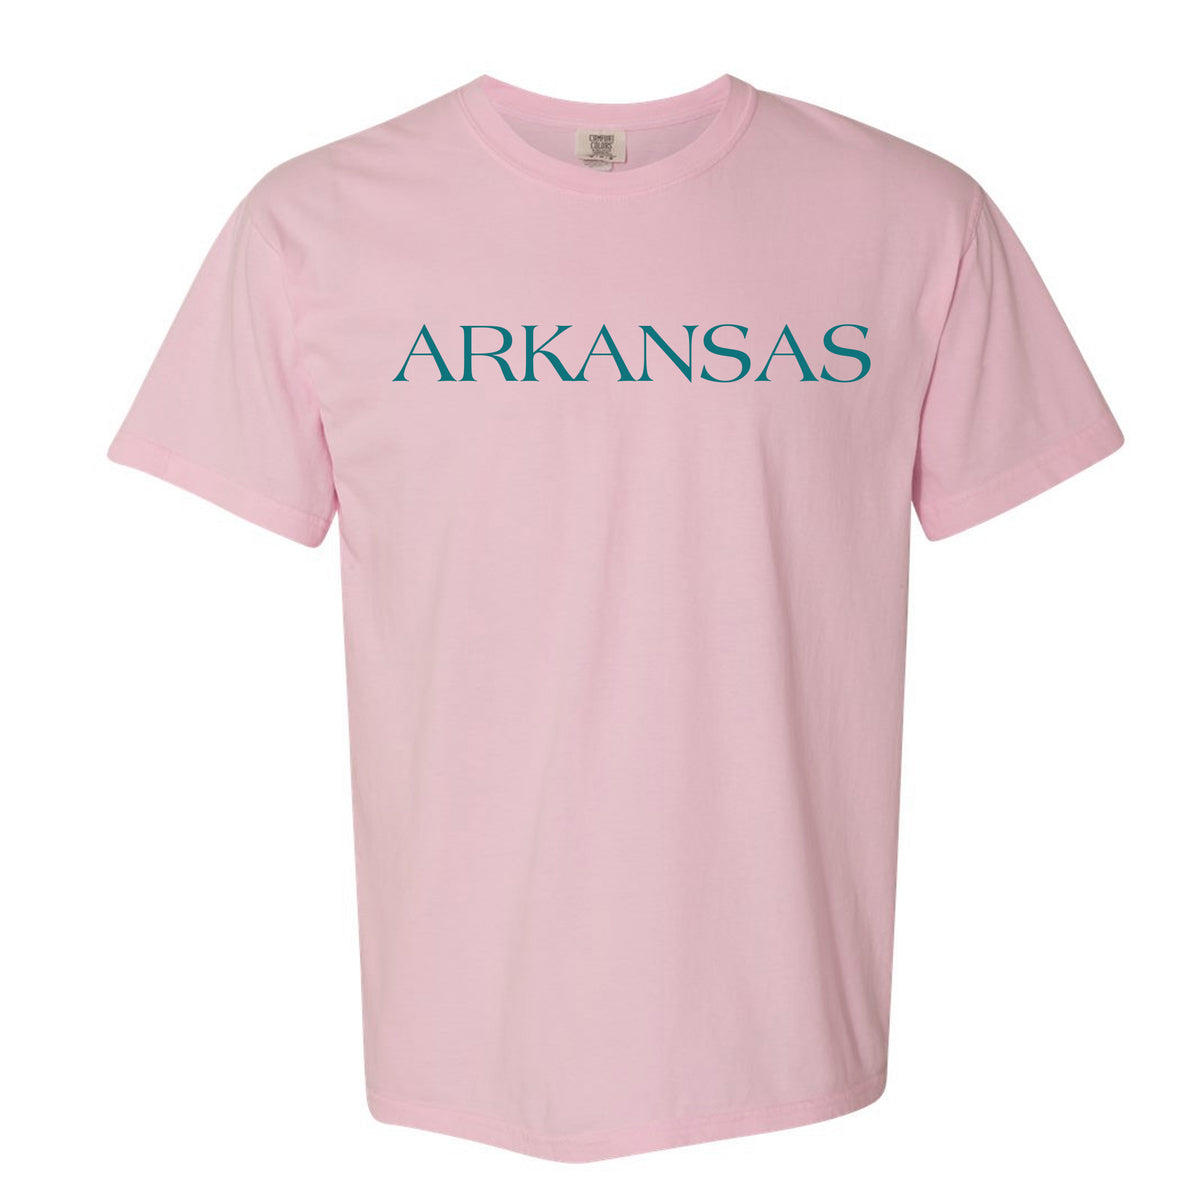 By The Sea Arkansas Cotton Candy/Dark Mint T-shirt